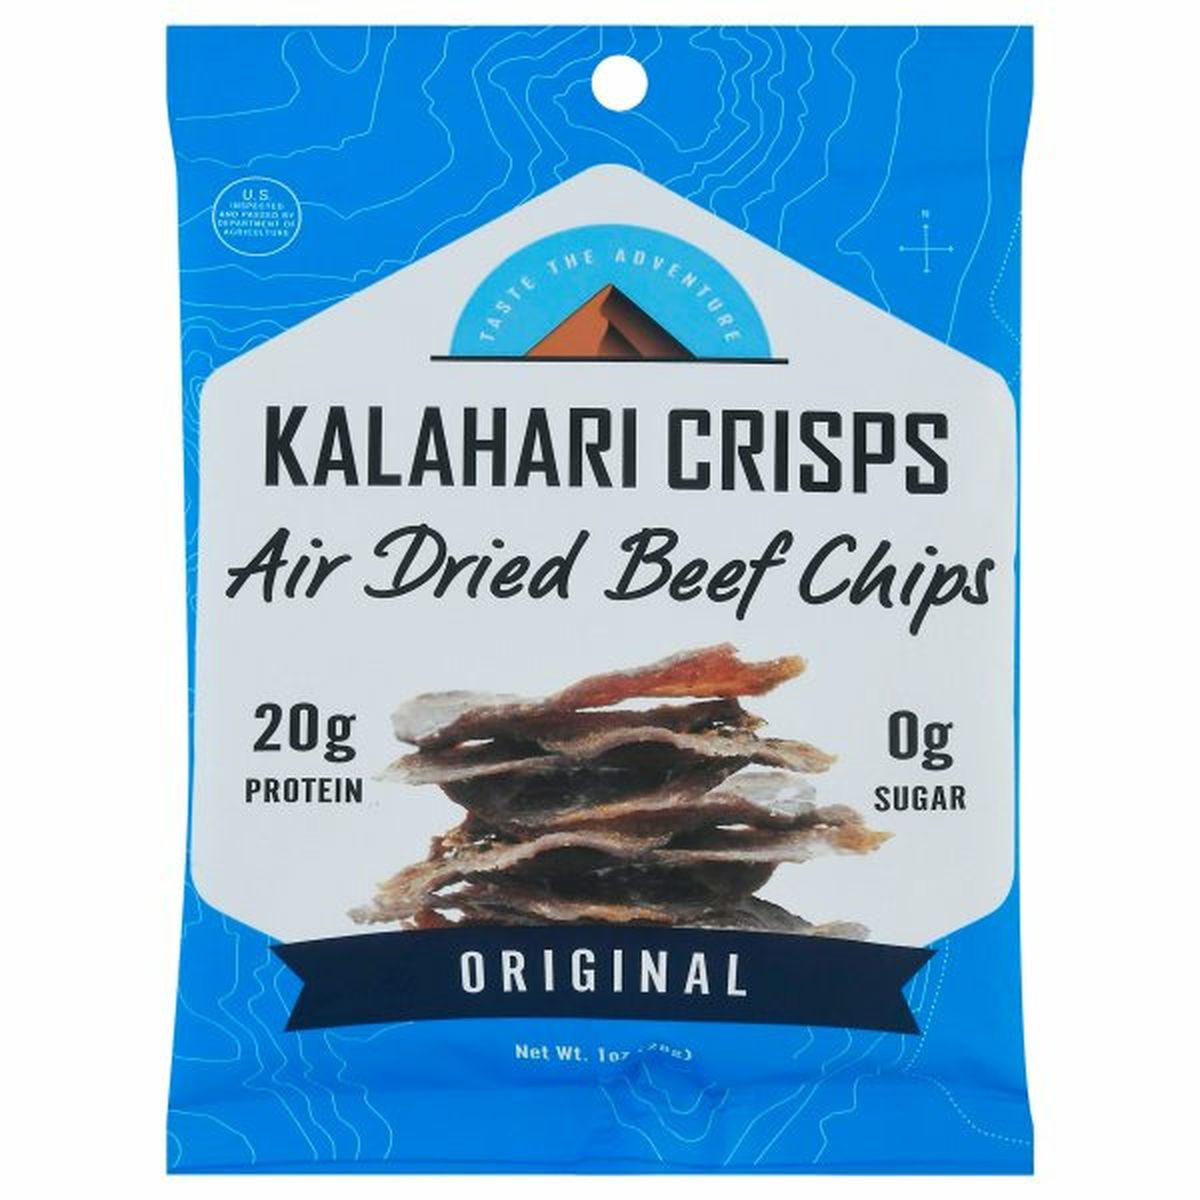 Calories in Kalahari Crisps Beef Chips, Original